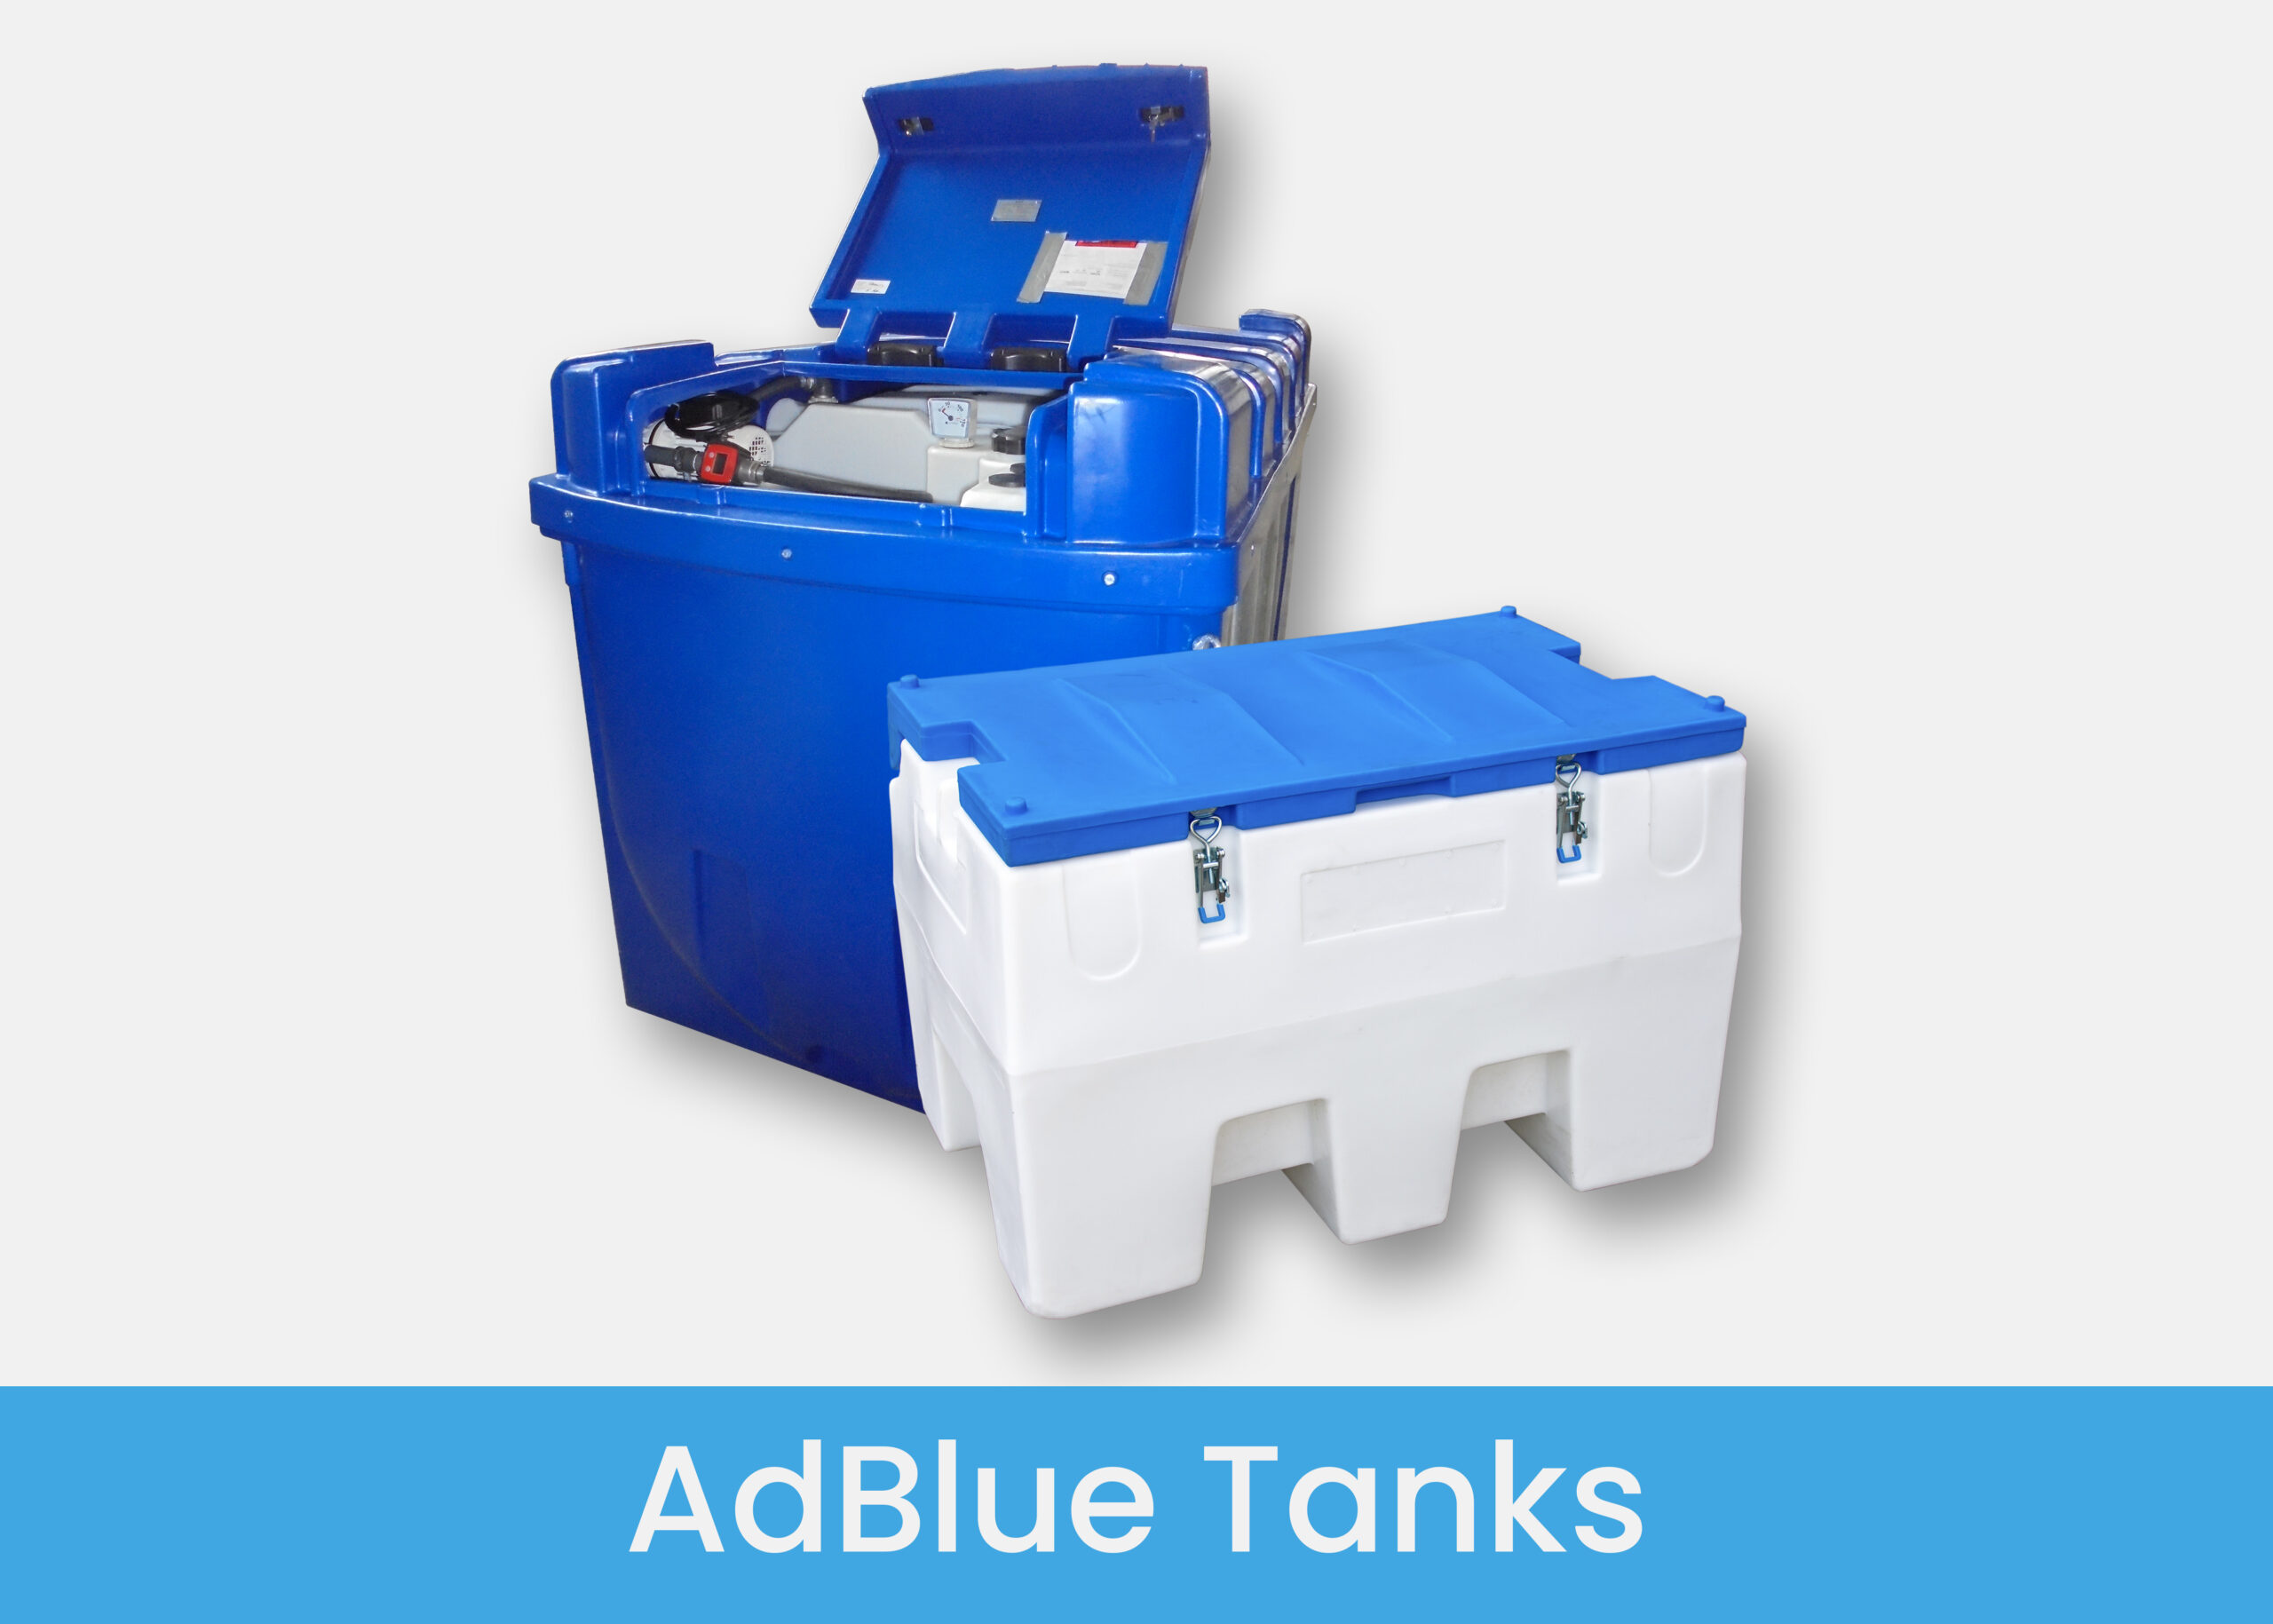 NL Adblue Tank